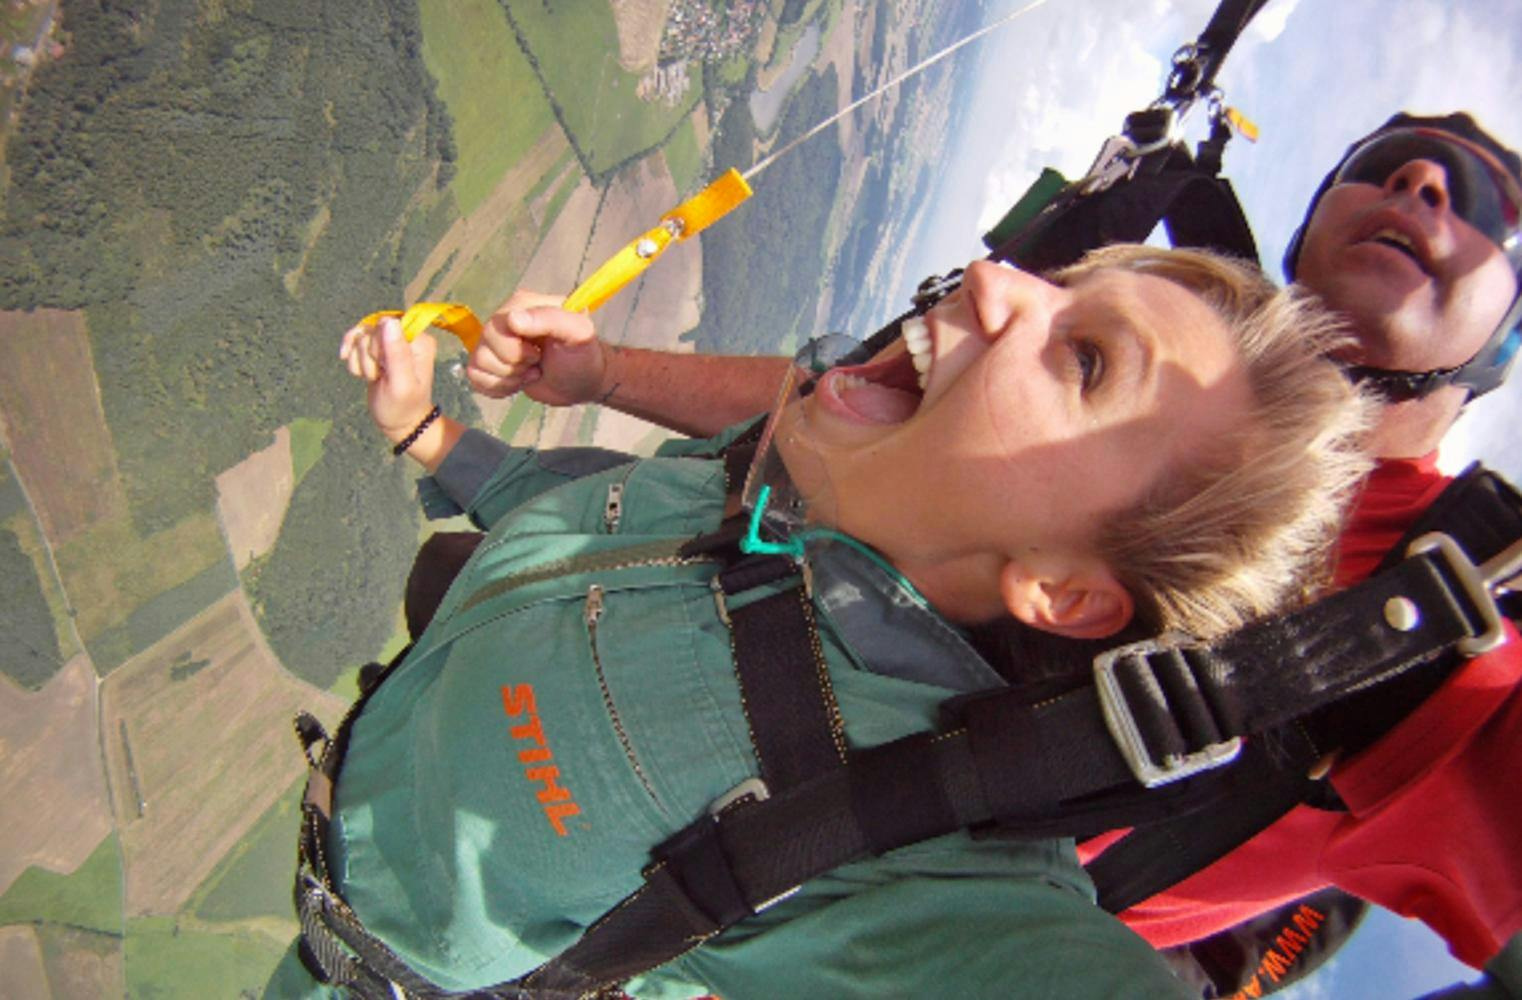 Fallschirmspringen|ca. 4000 m & 60 Sek. Freifall |Action pur